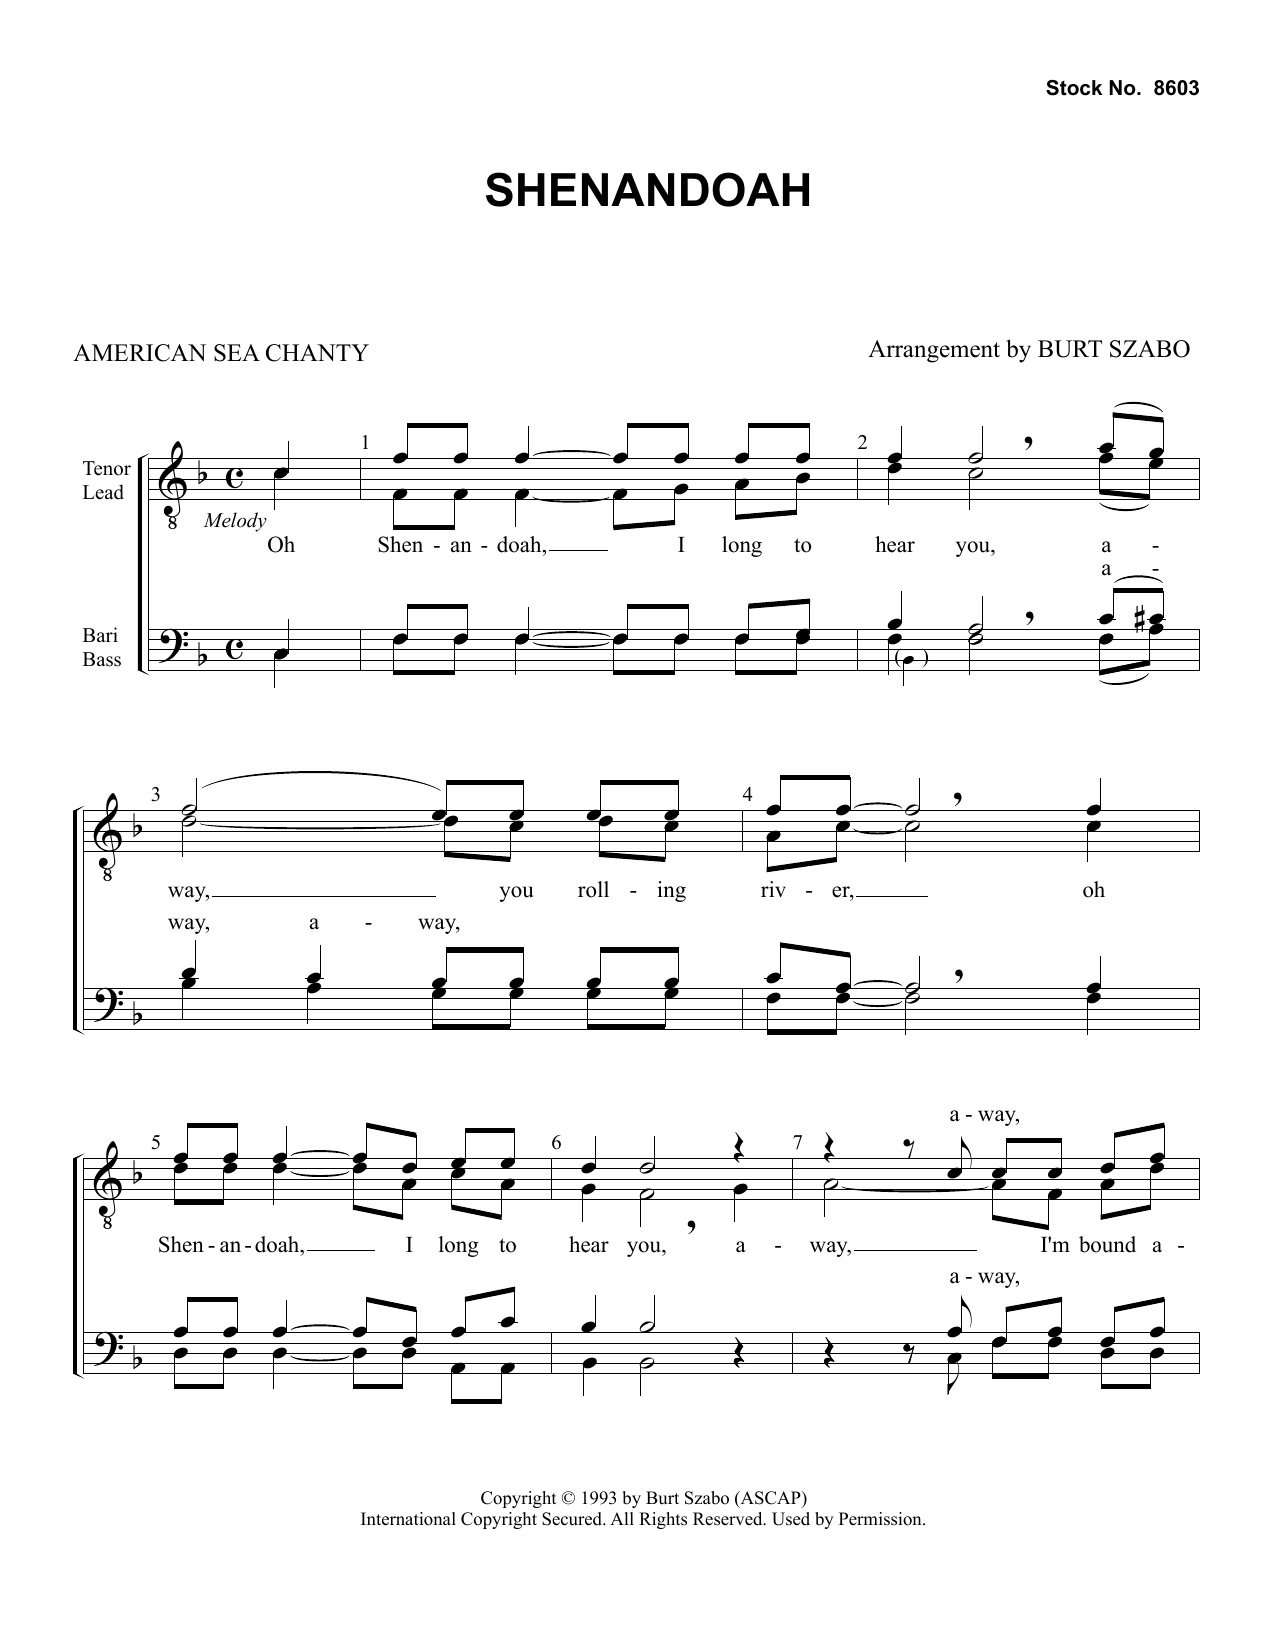 American Sea Chanty Shenandoah (arr. Burt Szabo) Sheet Music Notes & Chords for SATB Choir - Download or Print PDF